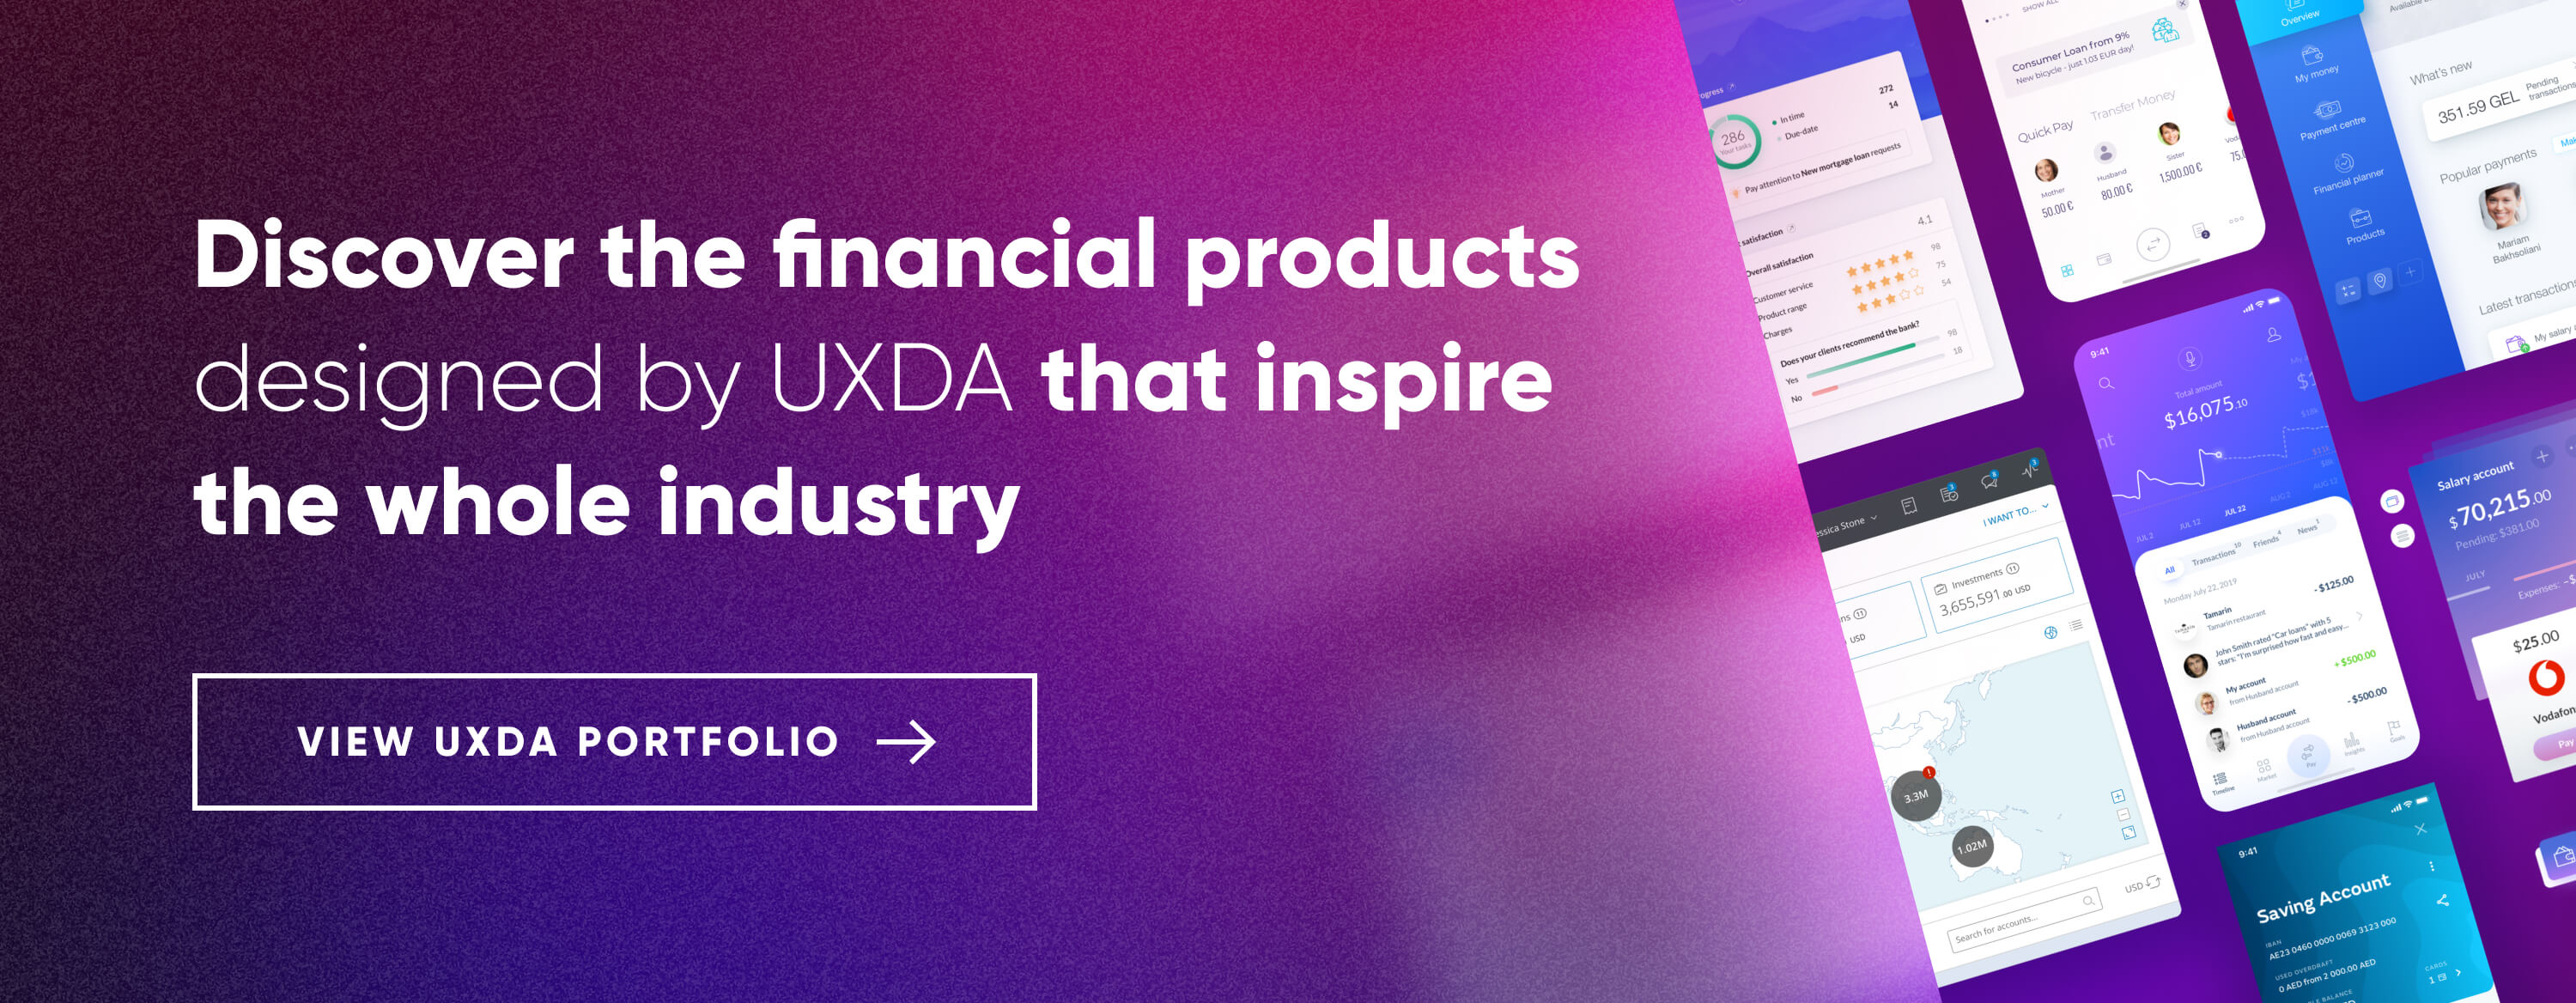 uxda-portfolio-financial-digital-product-inspire-industry-ux-1669633293.jpg